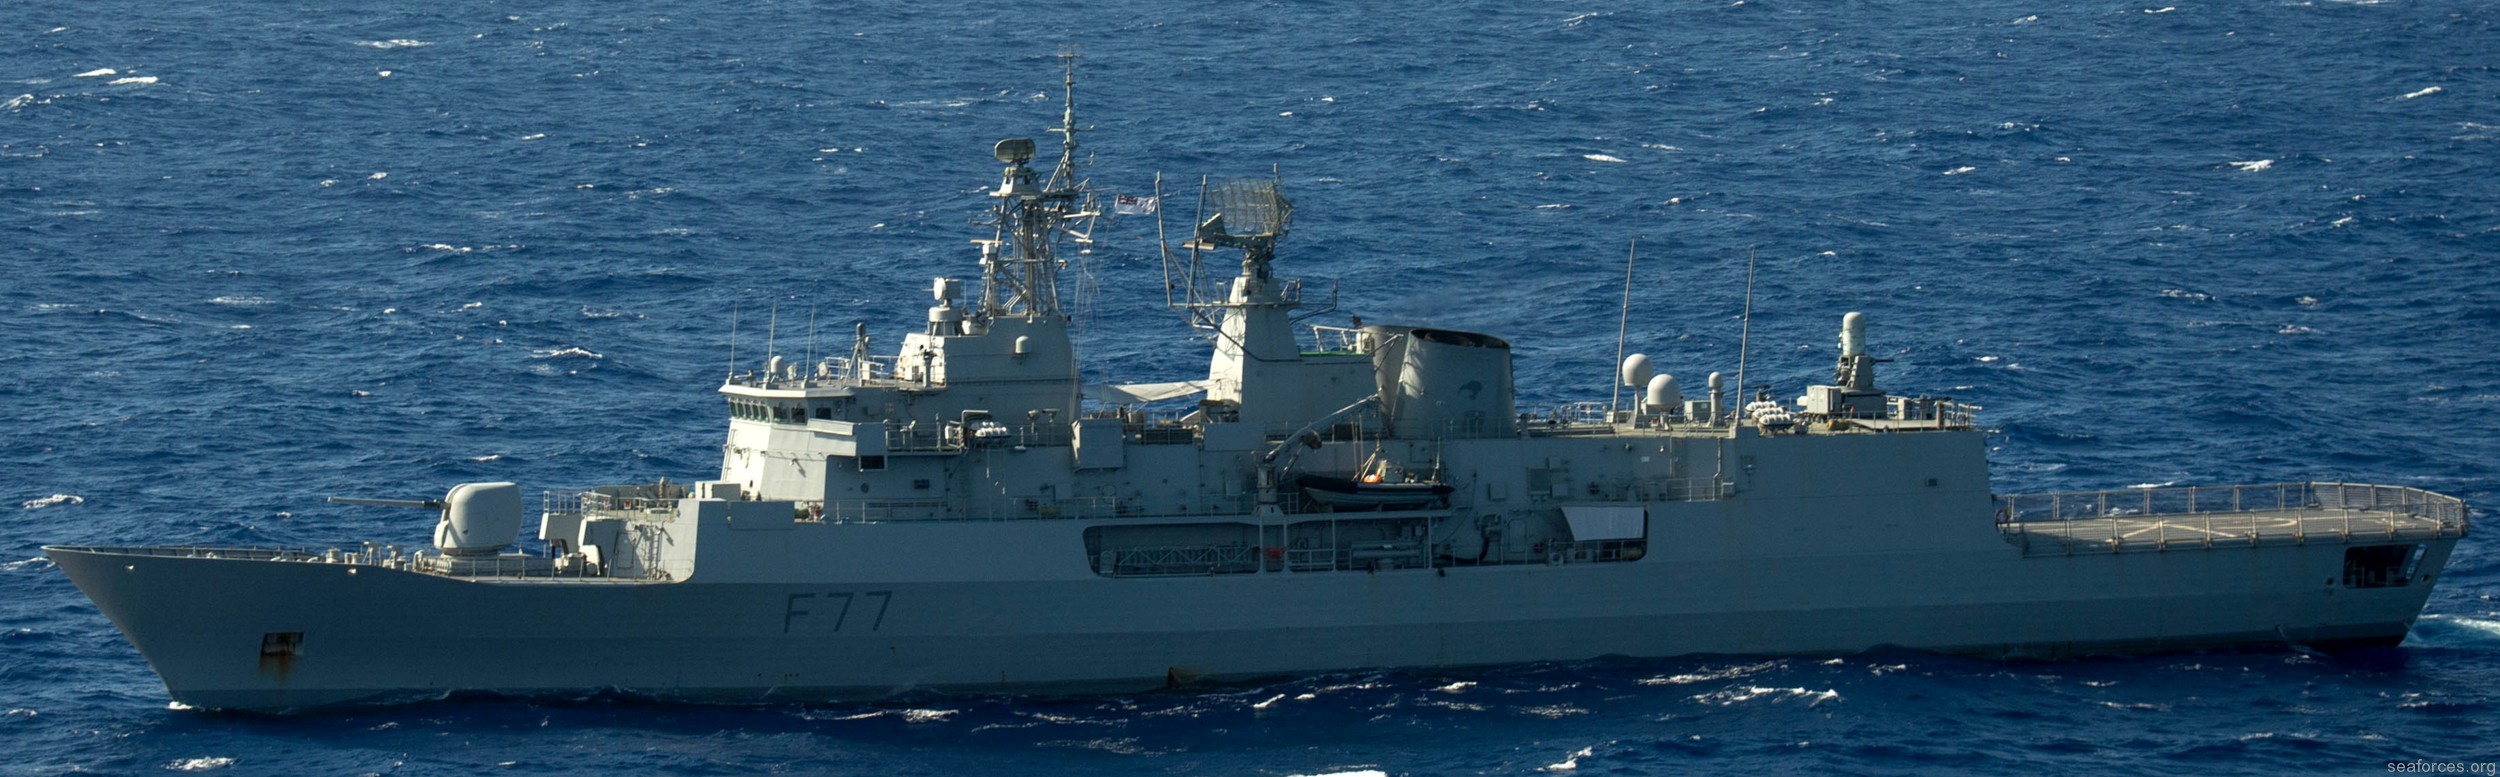 f-77 hmnzs te kaha anzac class frigate royal new zealand navy 33